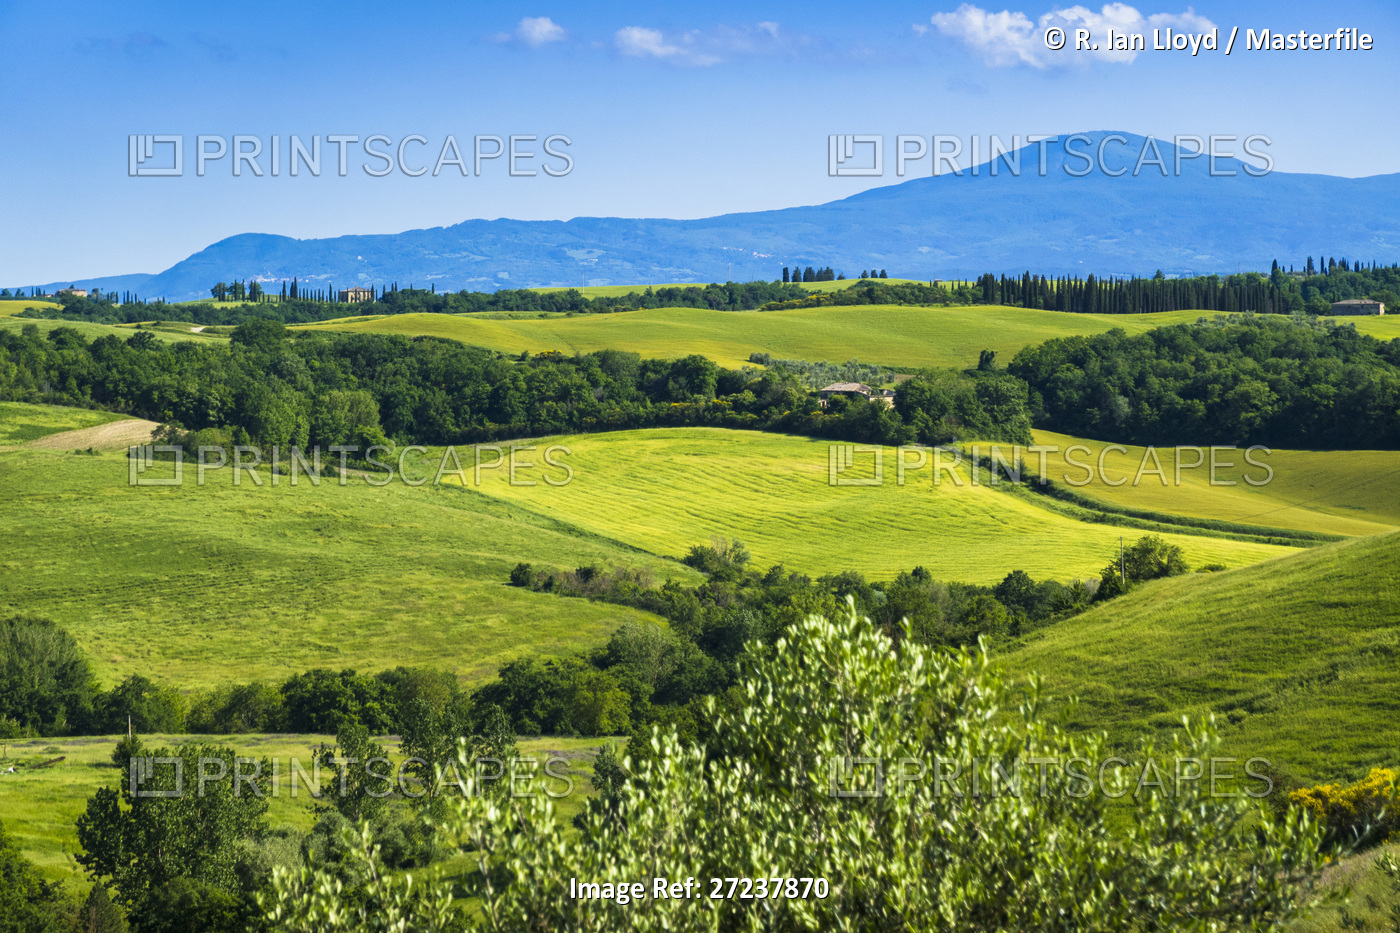 Farming country near San Giovanni D'Asso, Tuscany, Italy.